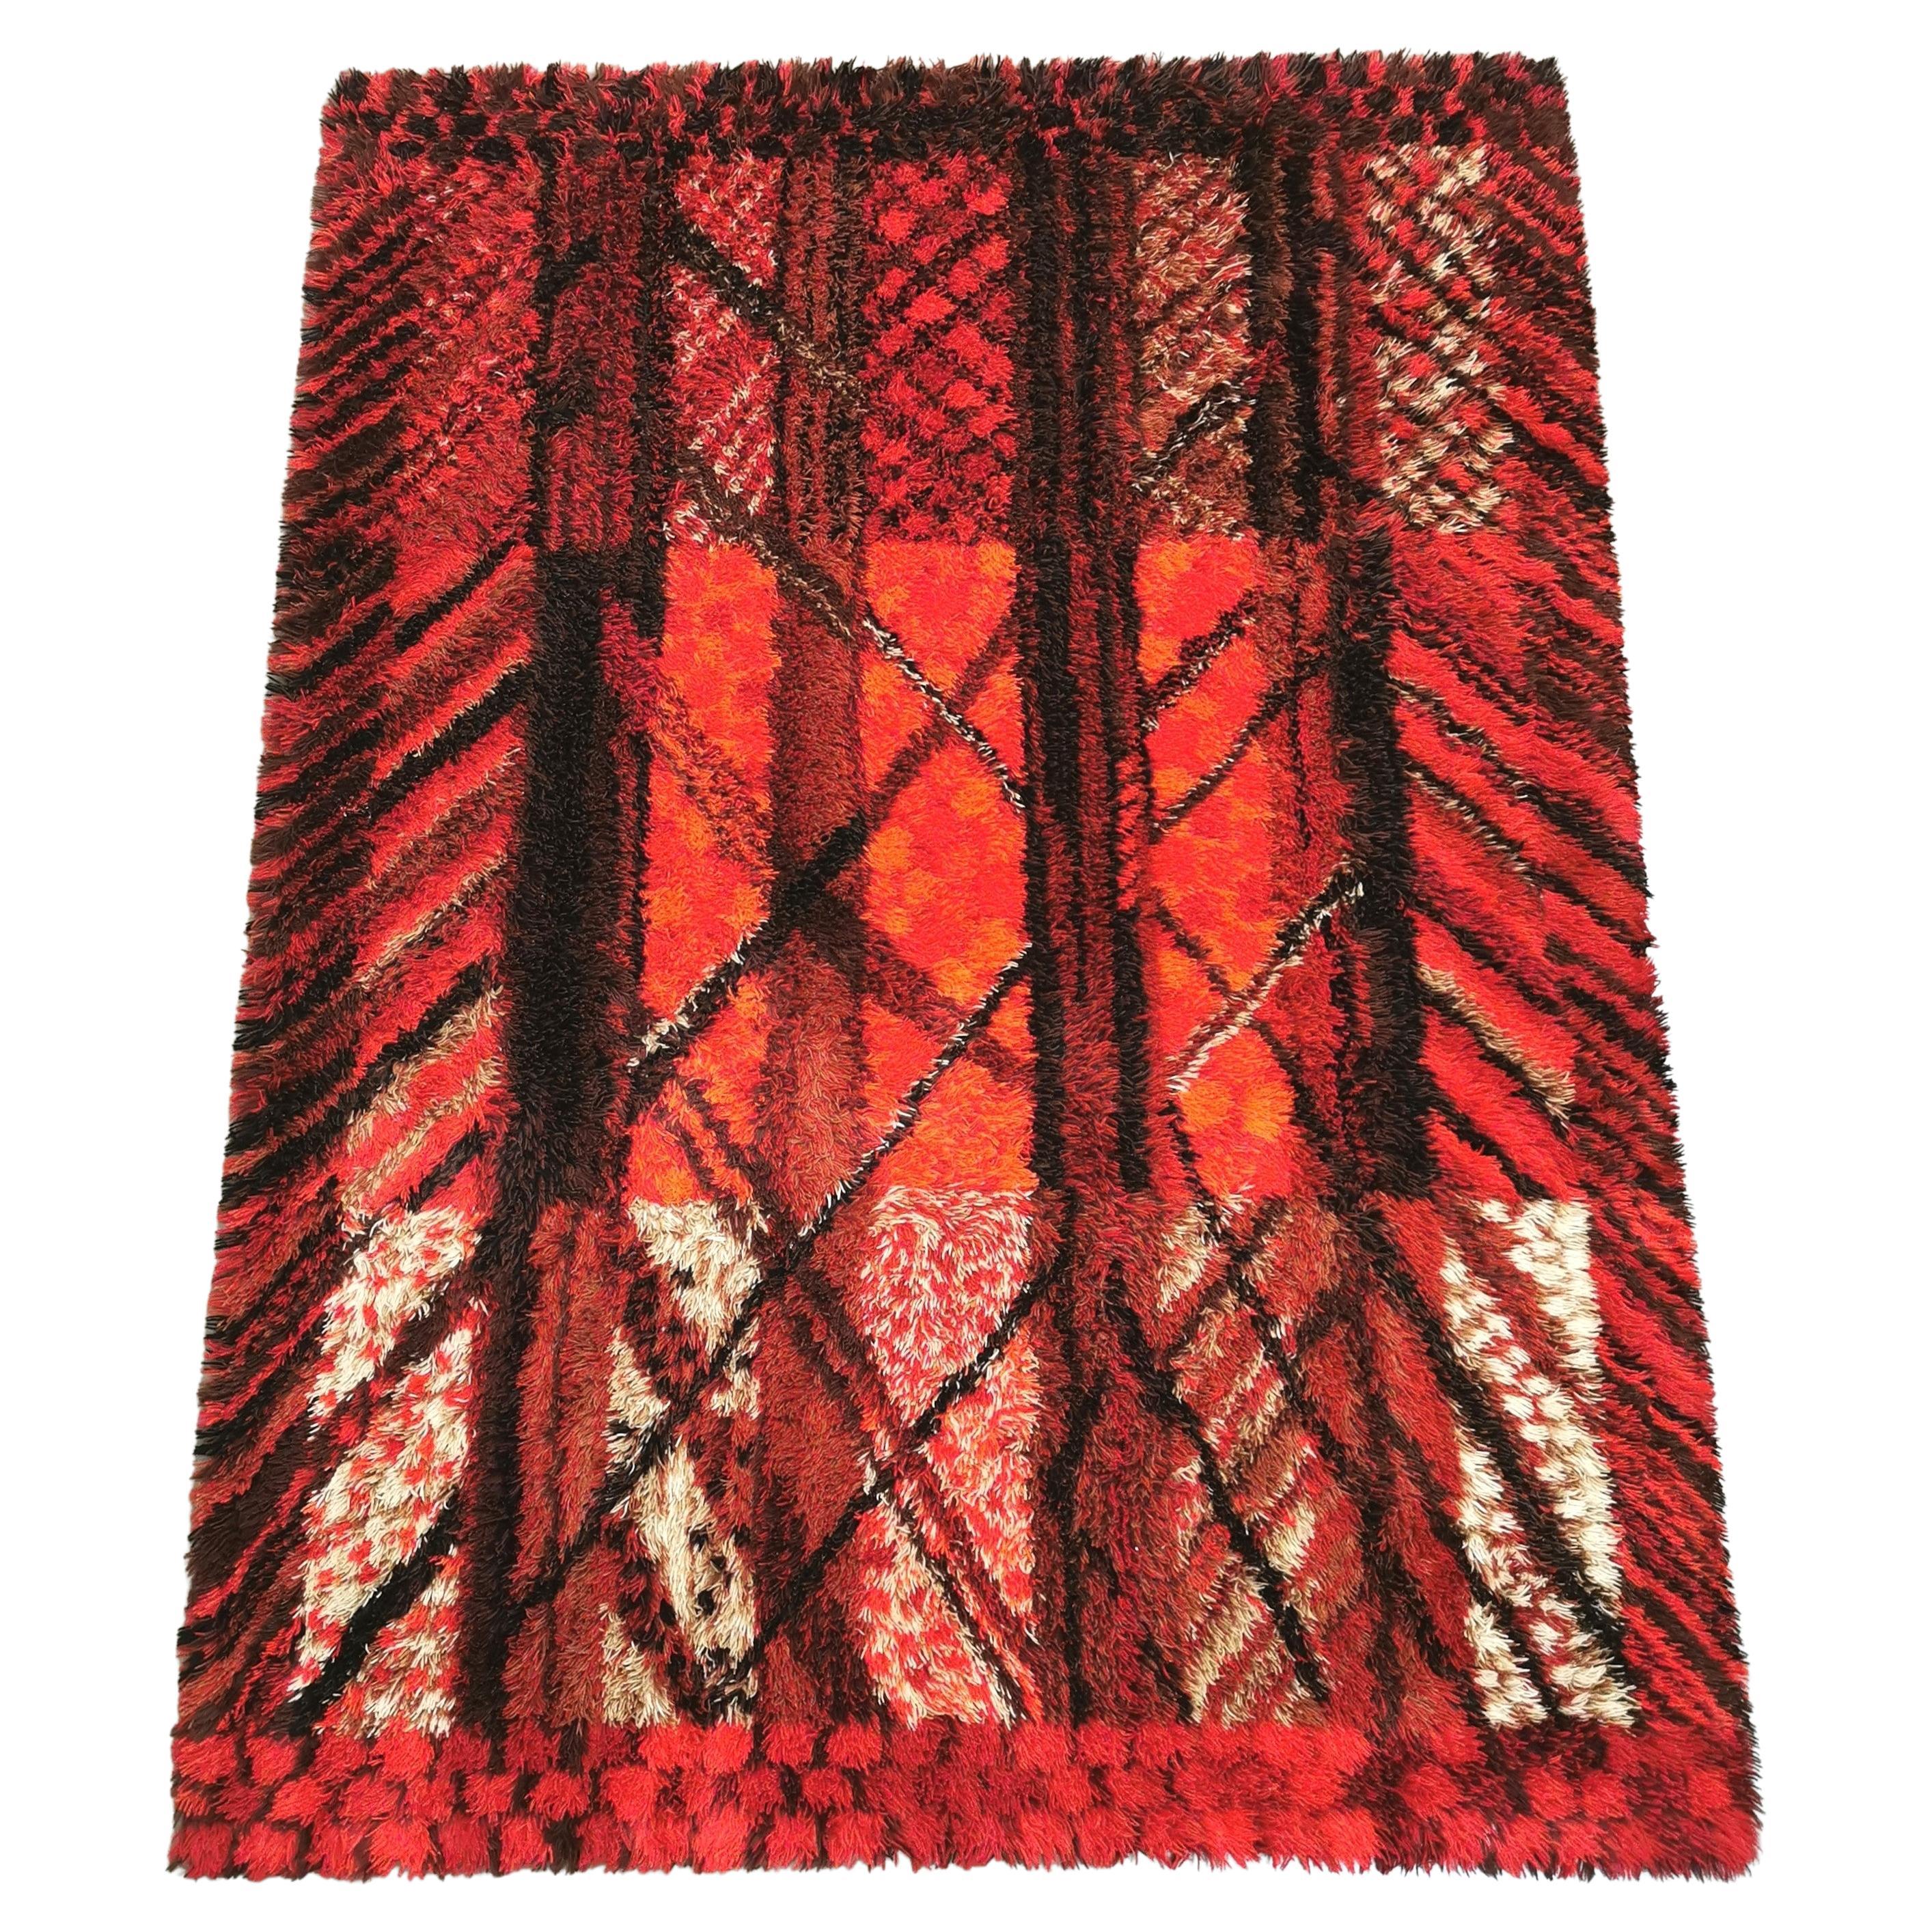 Midcentury Wool Red Black Large Carpet Rya Rug by Marianne Richter Sweden 1960s